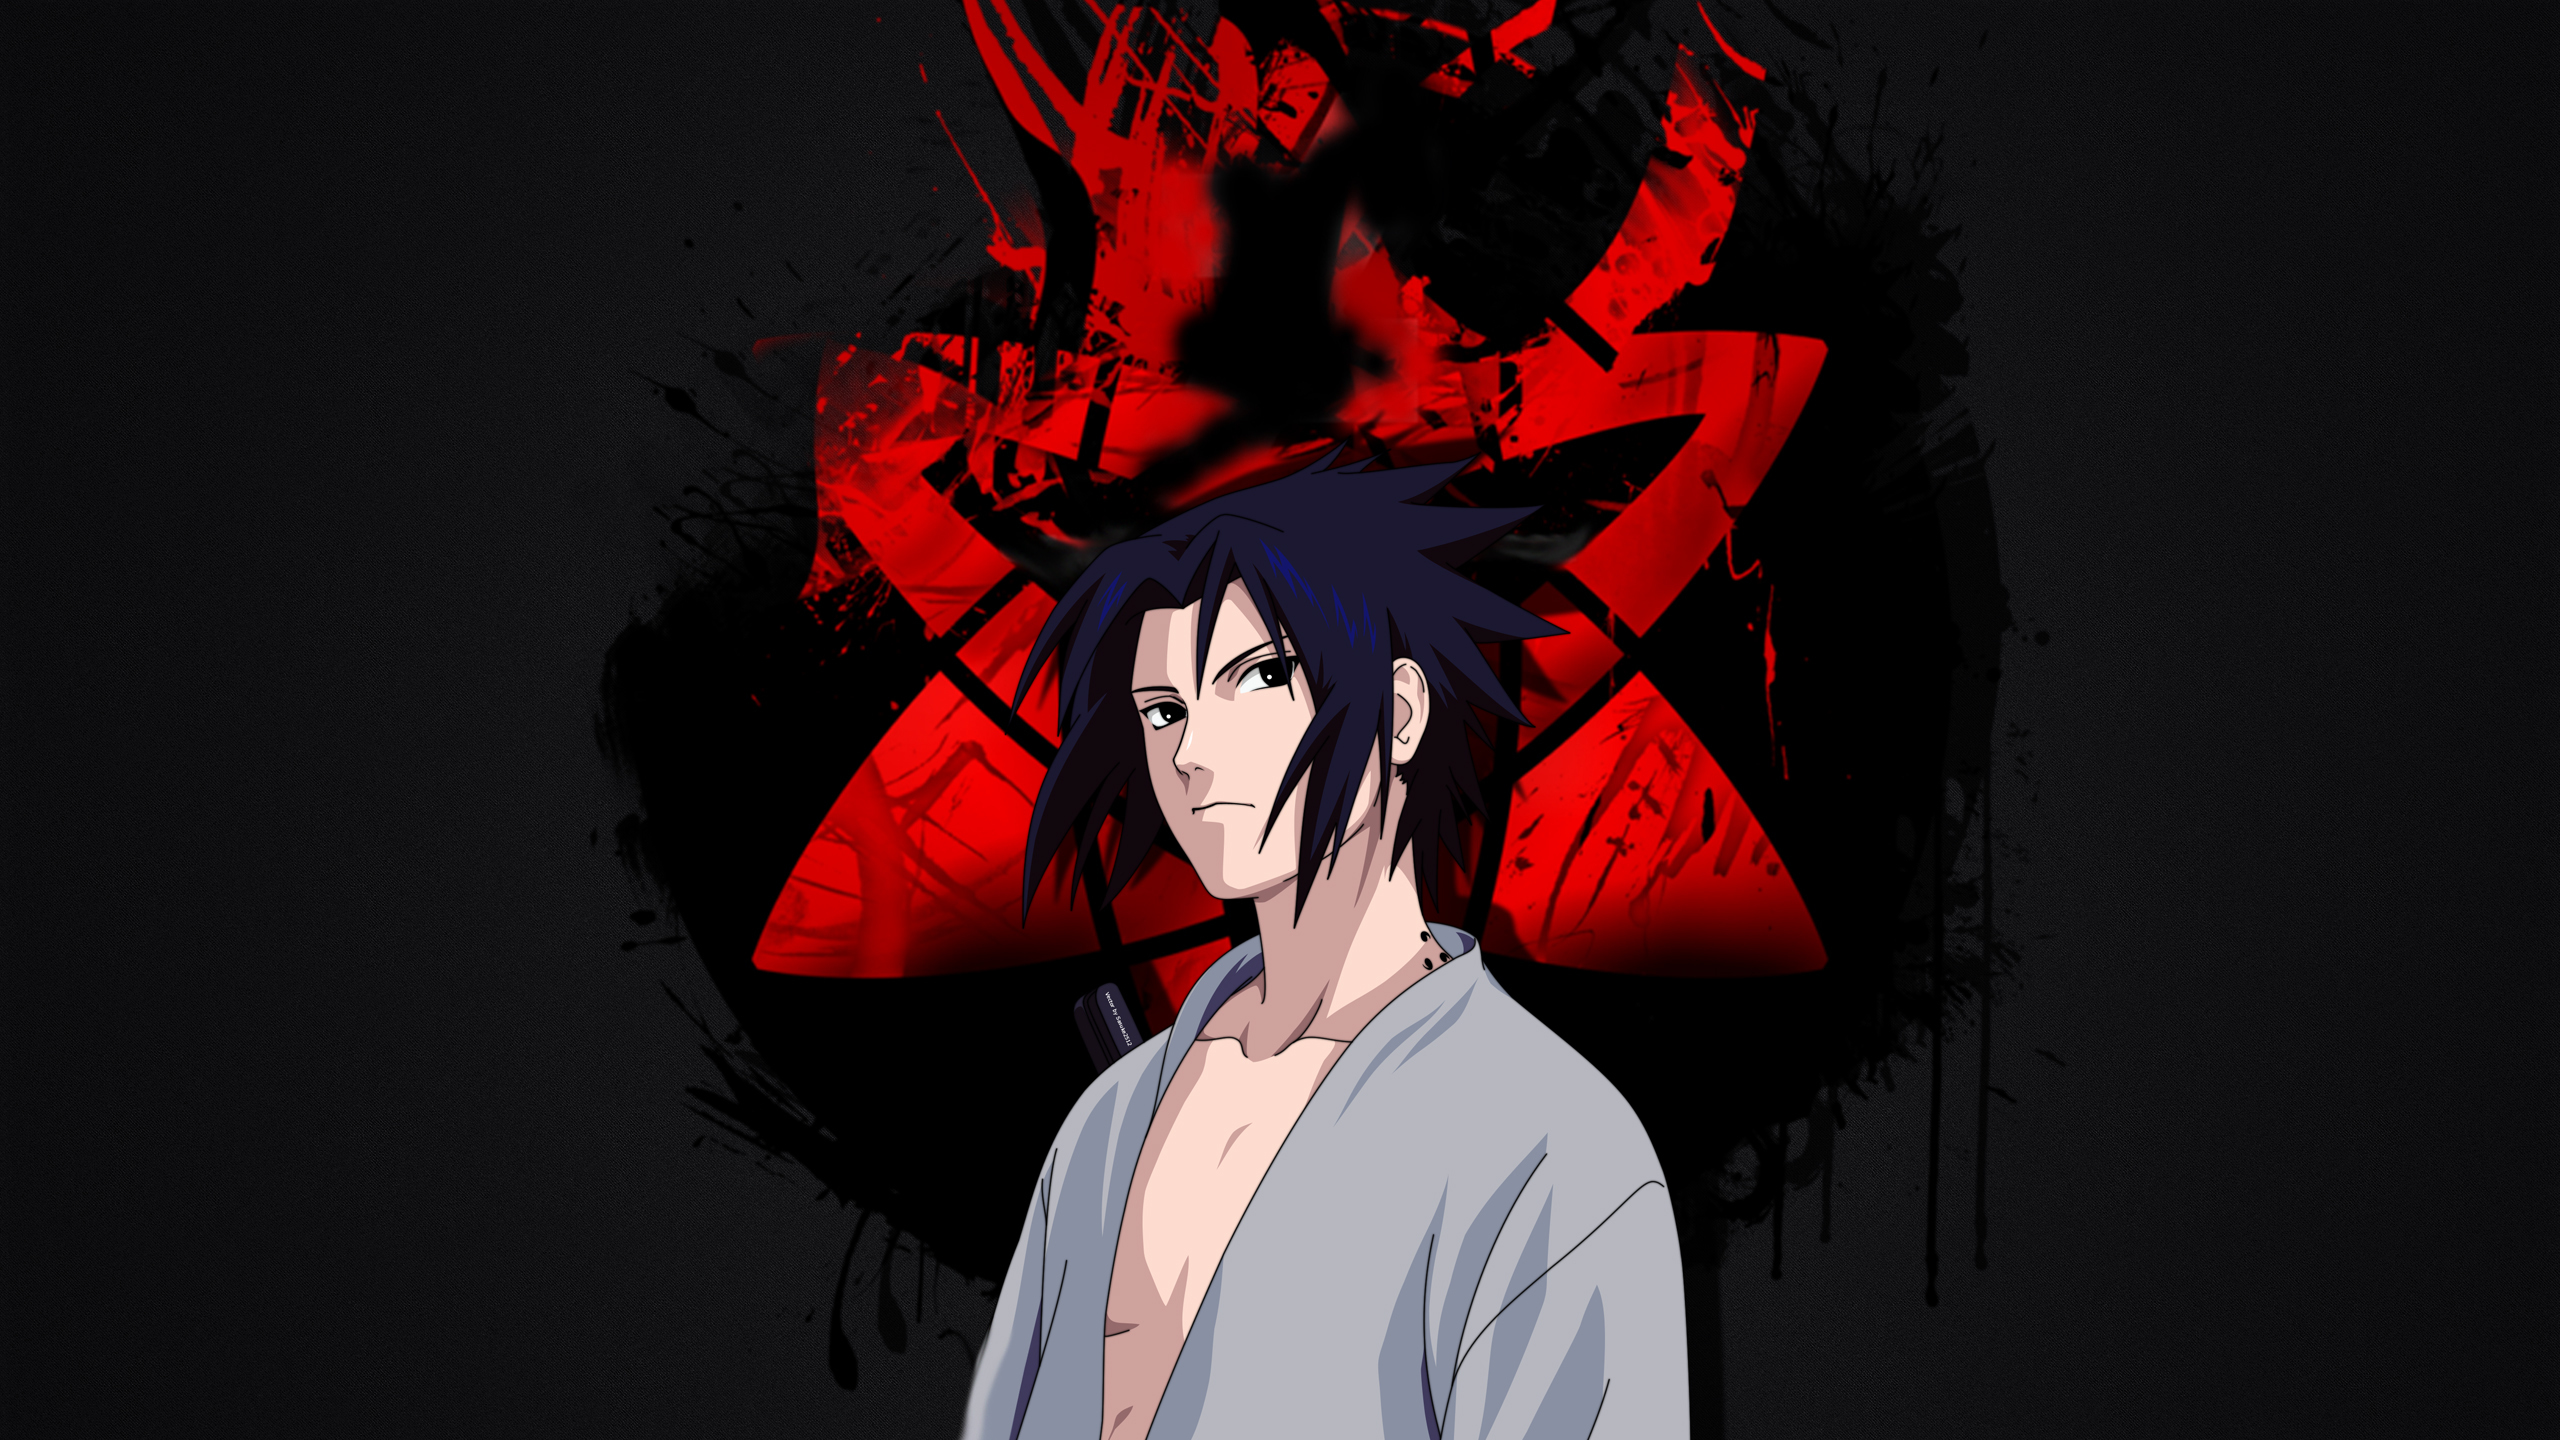 Sasuke Uchiha 1440P Resolution Wallpaper, HD Anime 4K Wallpaper, Image, Photo and Background